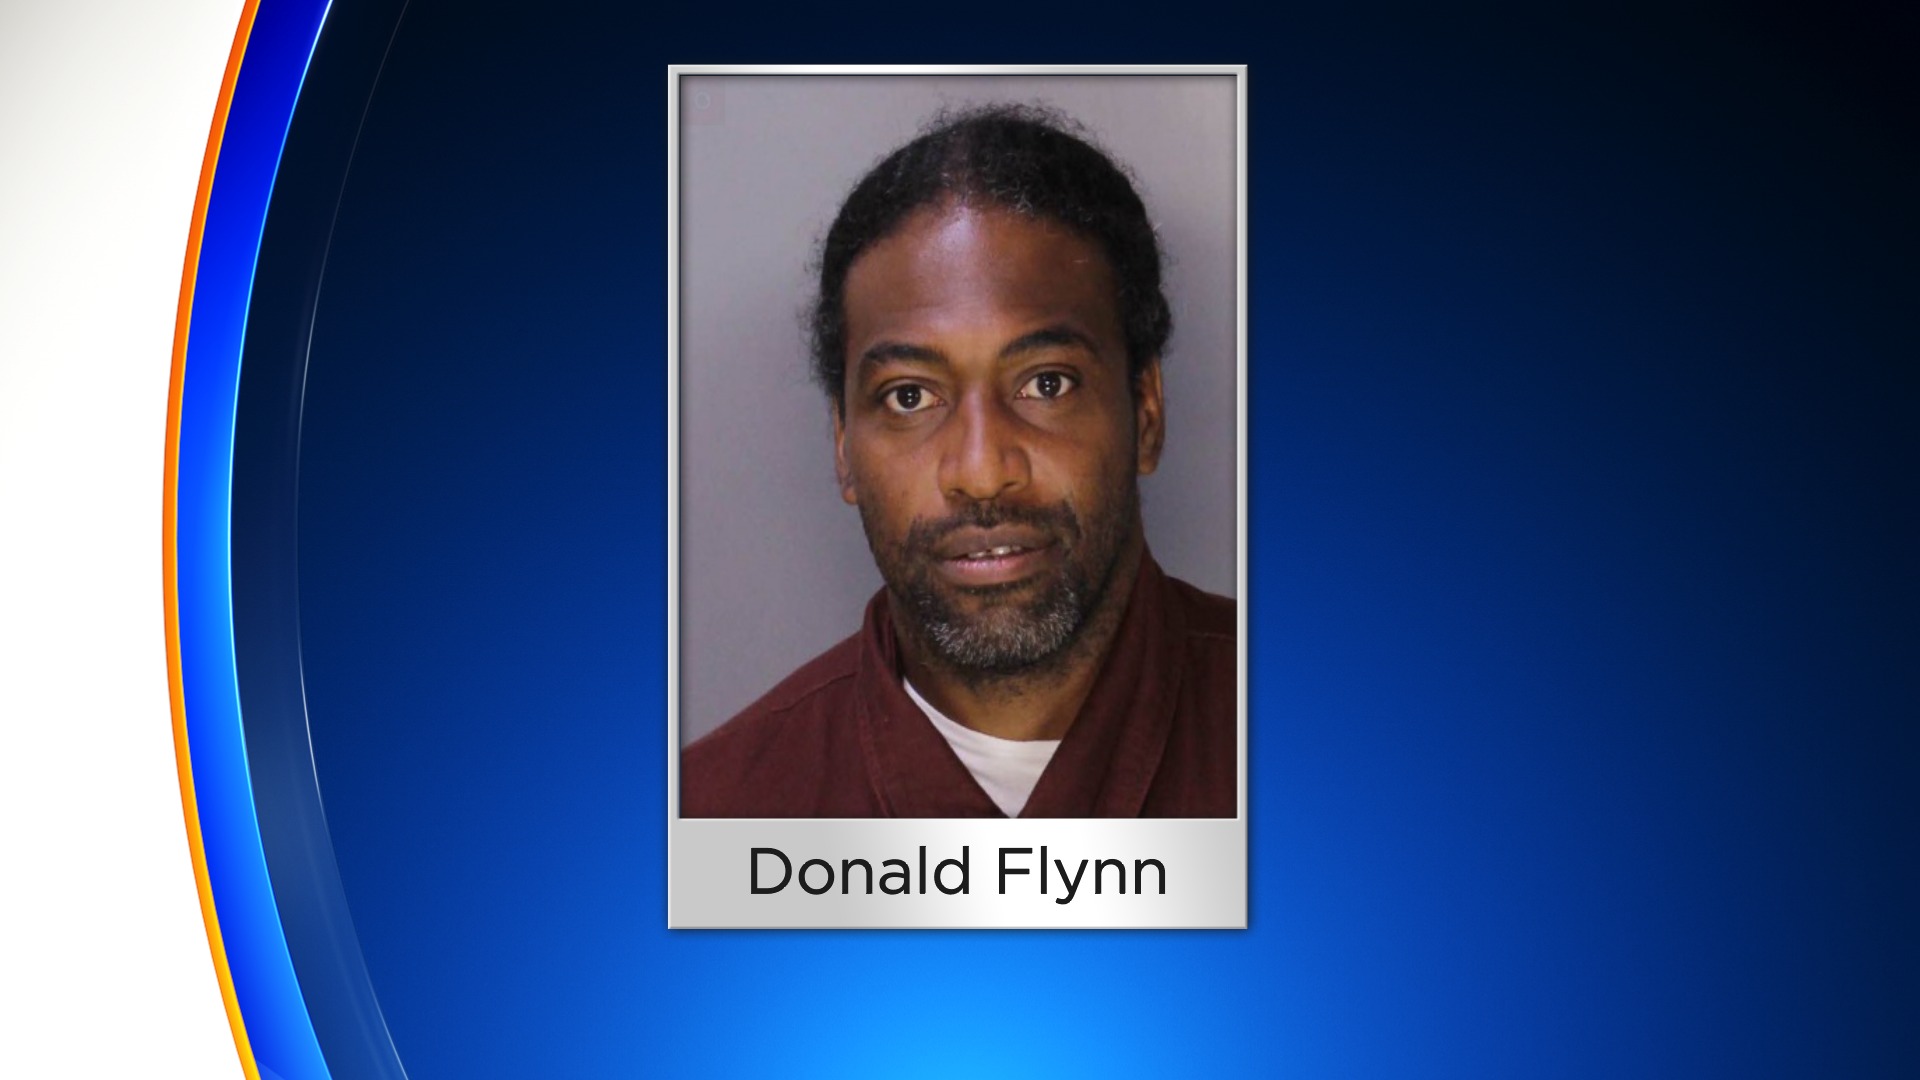 Police say Donald Flynn carjacked a woman at gunpoint in Ridley Township on Monday.